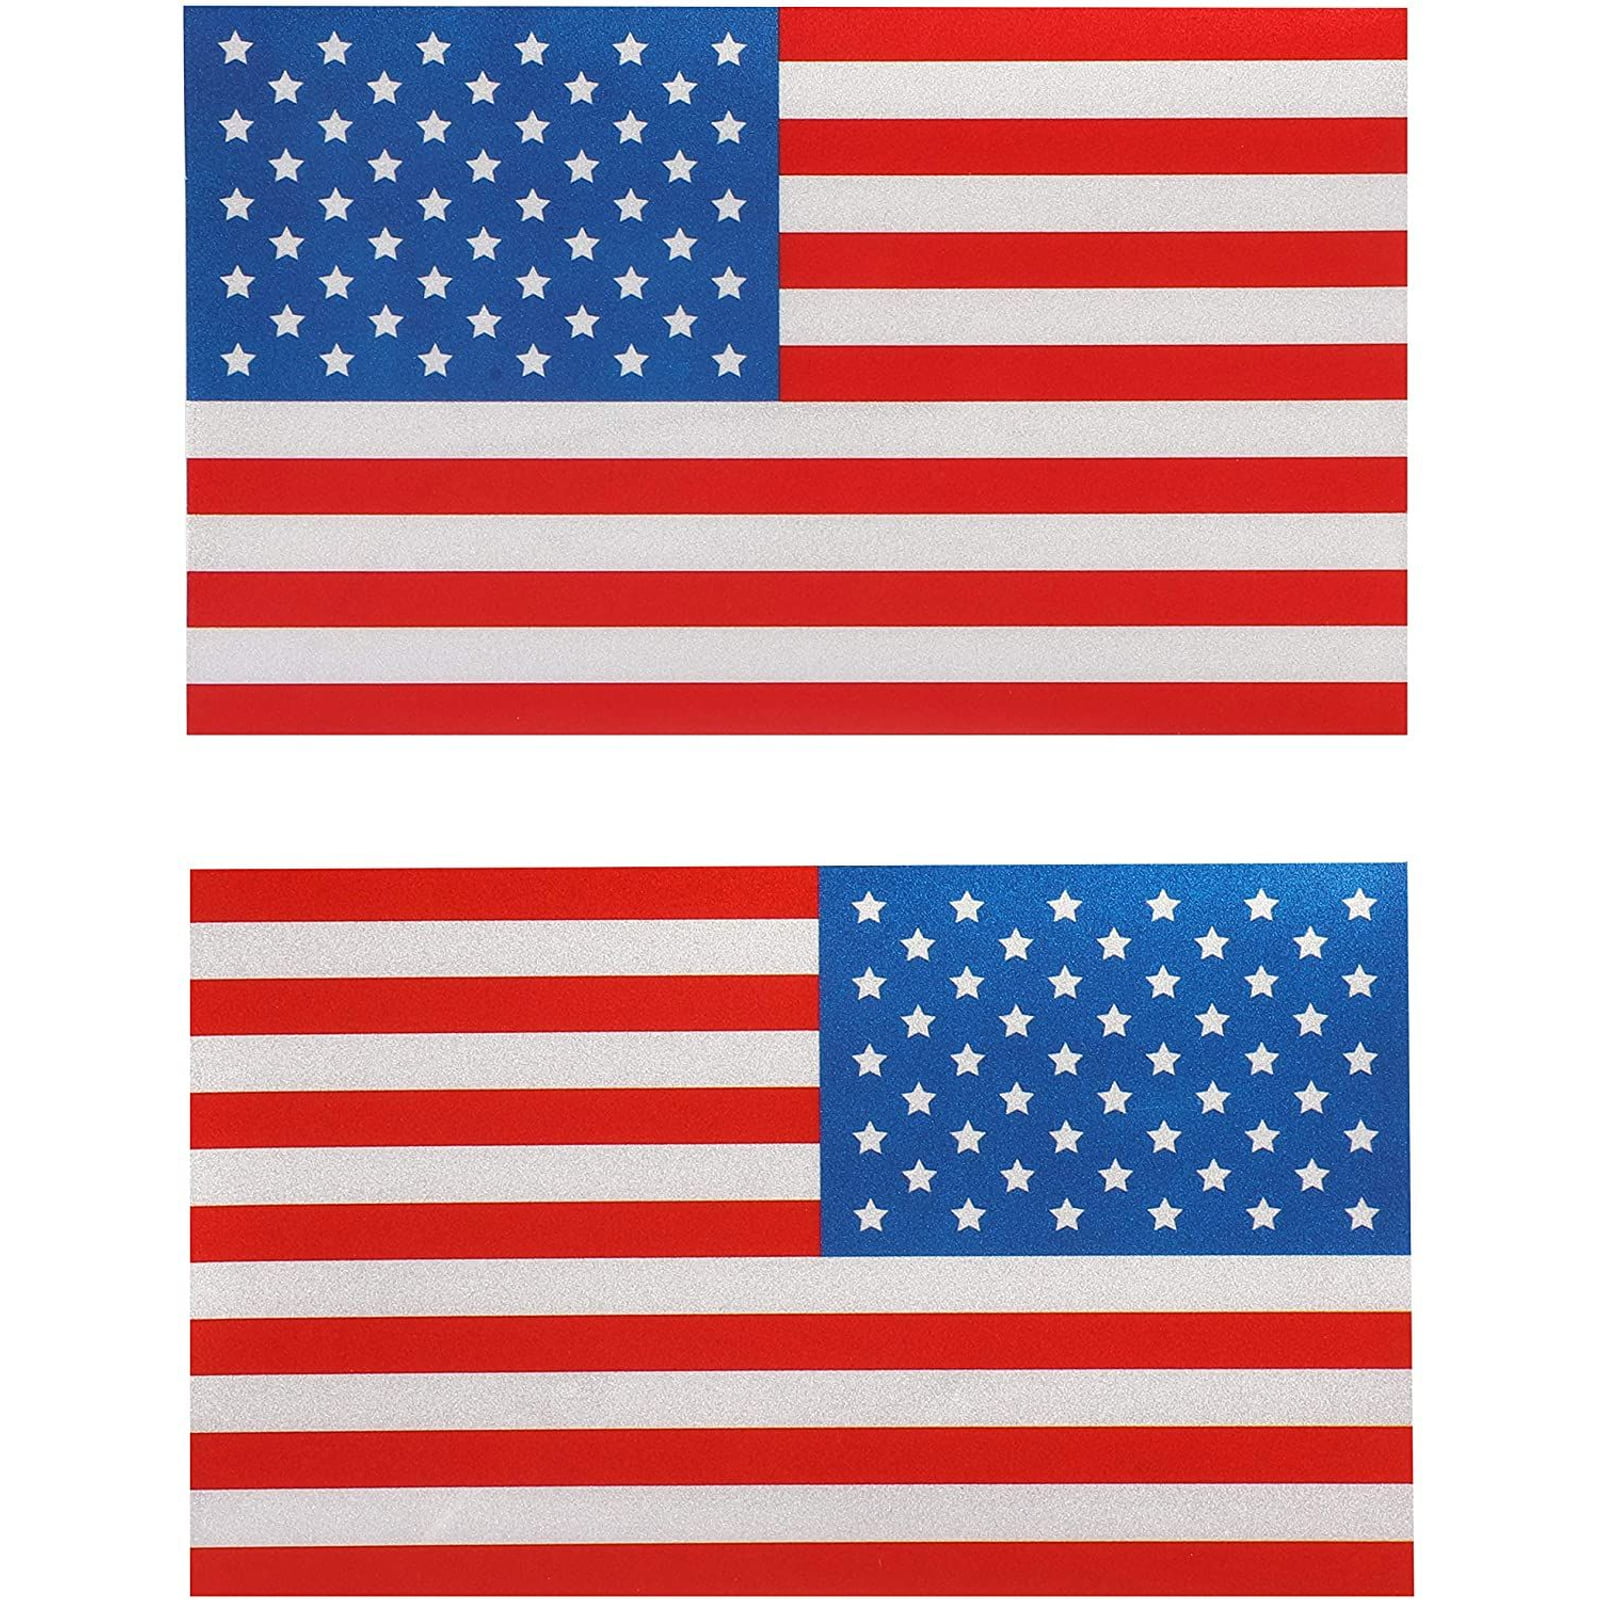 Window Sticker Military Veterans 5x3 American Flag Sticker Boat Sticker Reverse / High Intensity Reflective Patriotic Sticker